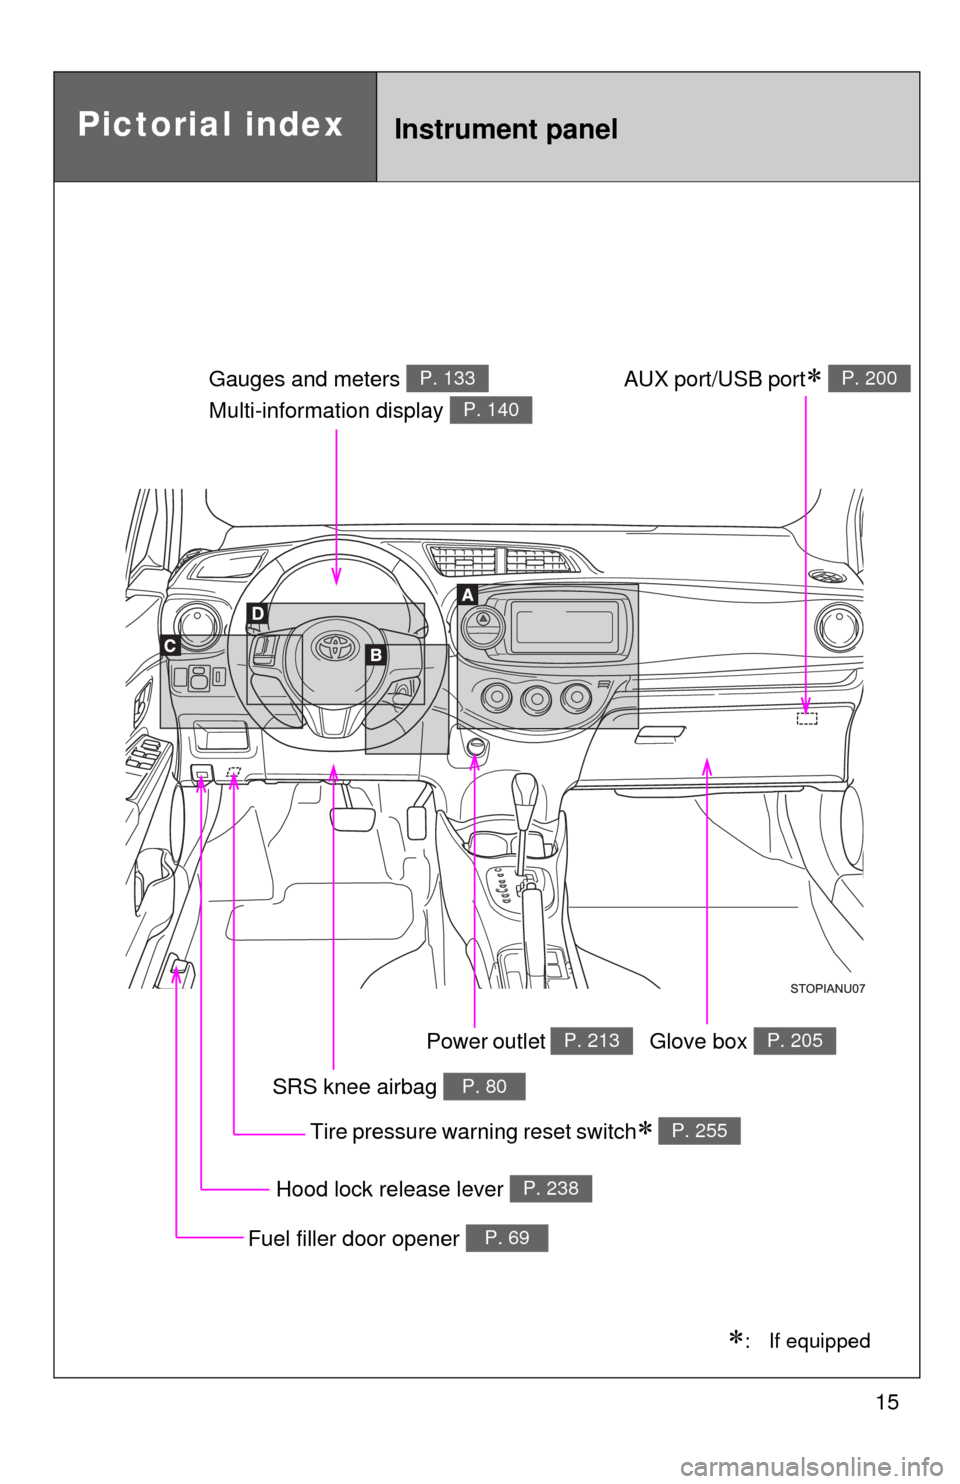 TOYOTA YARIS 2014 3.G Owners Manual 15
Pictorial indexInstrument panel
SRS knee airbag P. 80
Hood lock release lever P. 238
Gauges and meters 
Multi-information display P. 133
P. 140
Glove box P. 205
Fuel filler door opener P. 69
: I